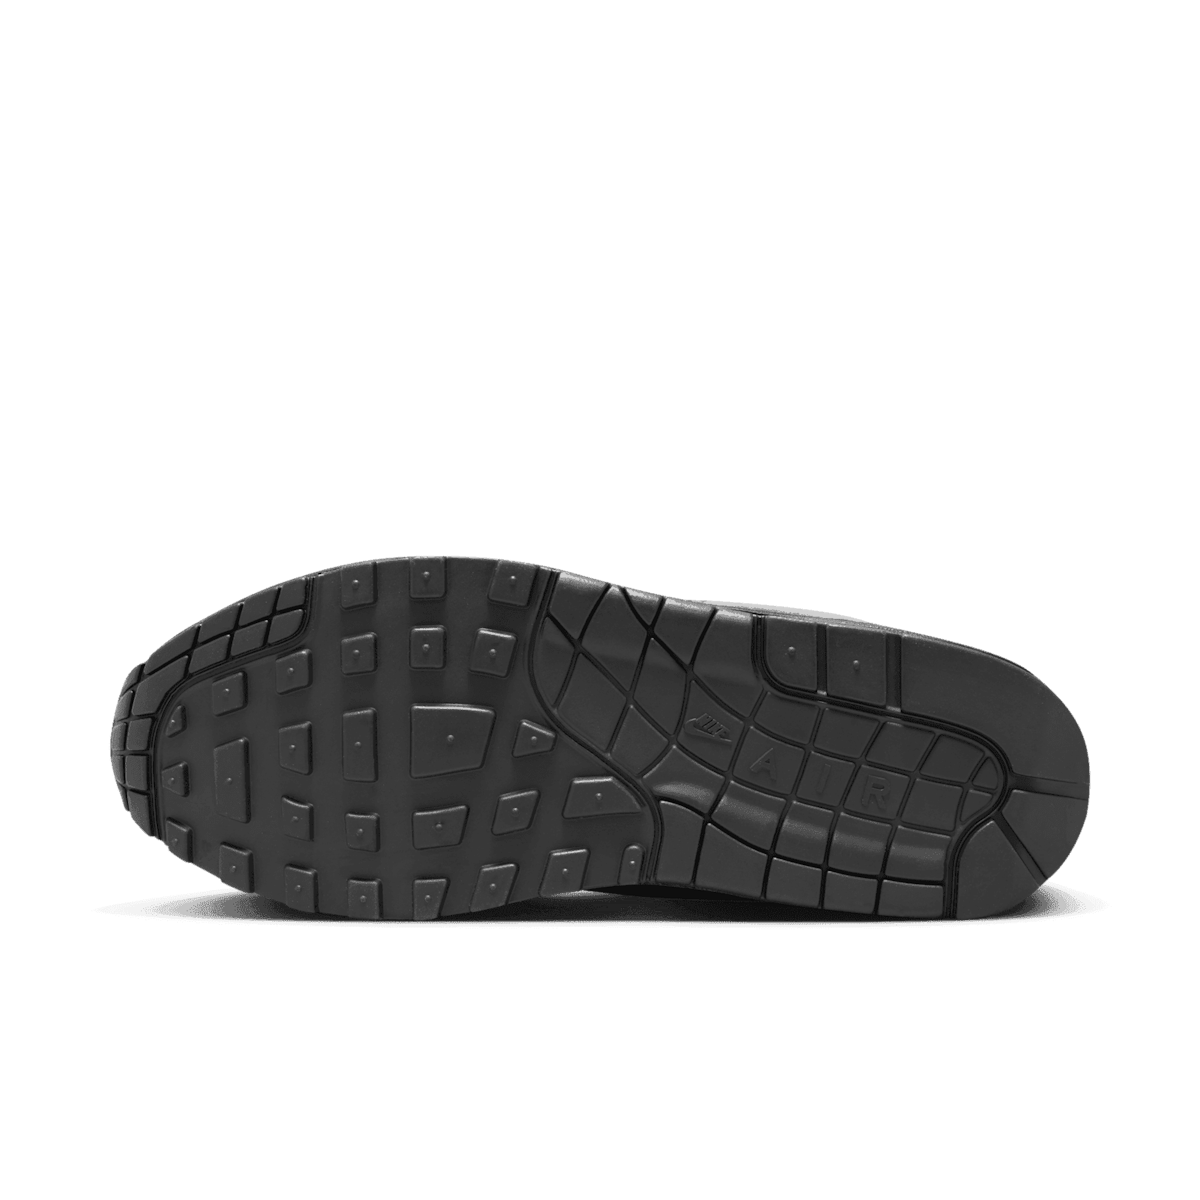 Nike Air Max 1 Black White - FZ0628-010 Release Date